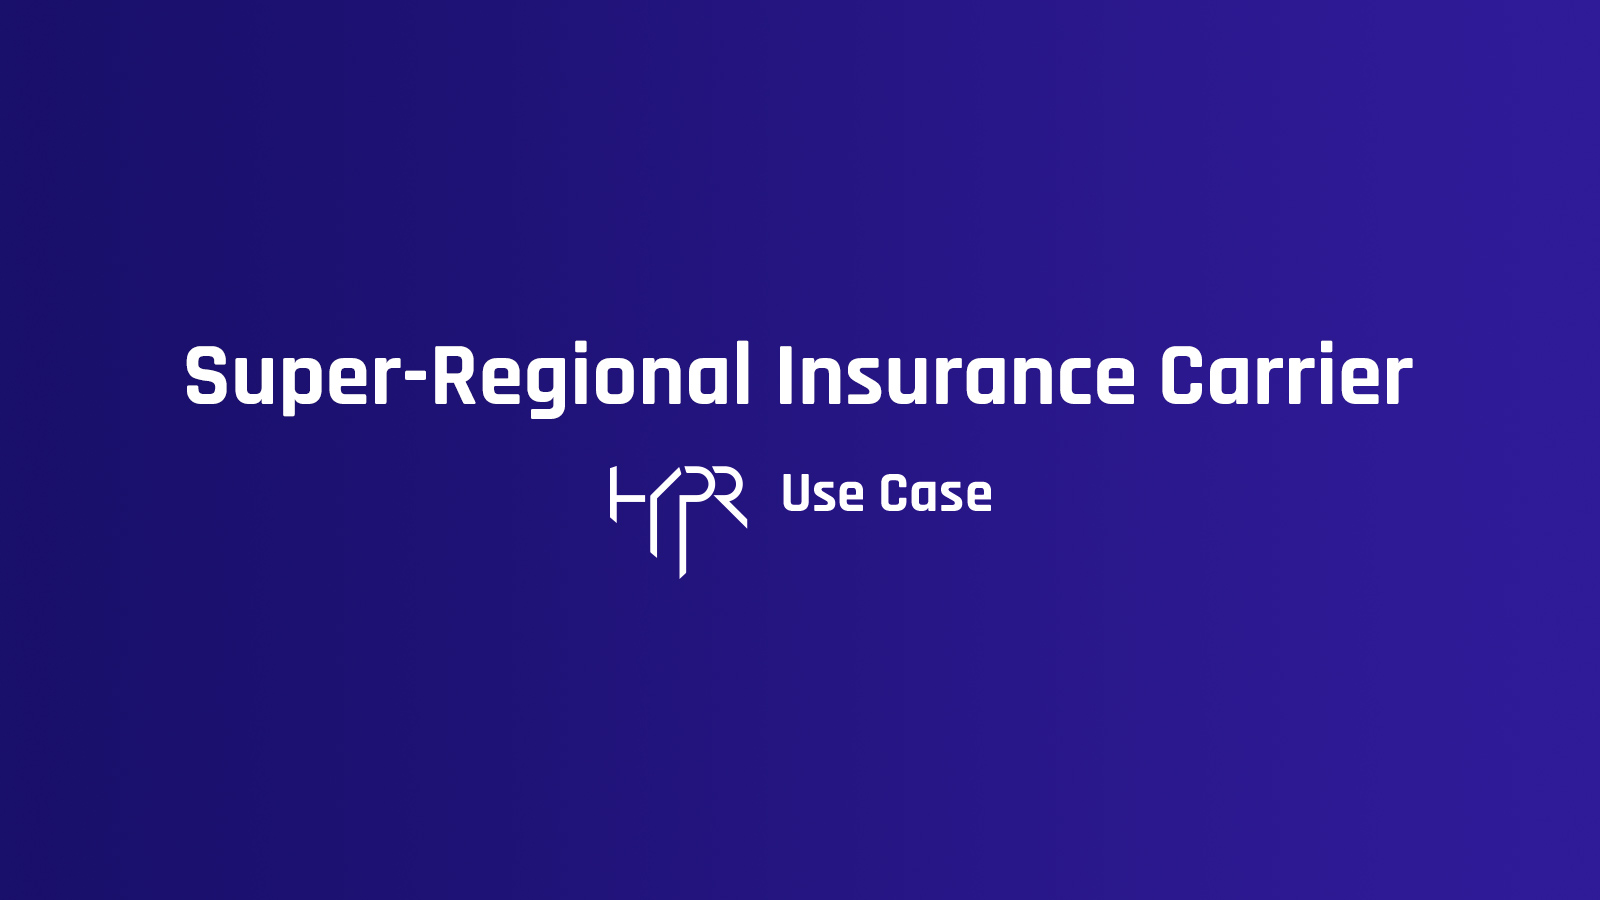 Super Regional Insurance Company